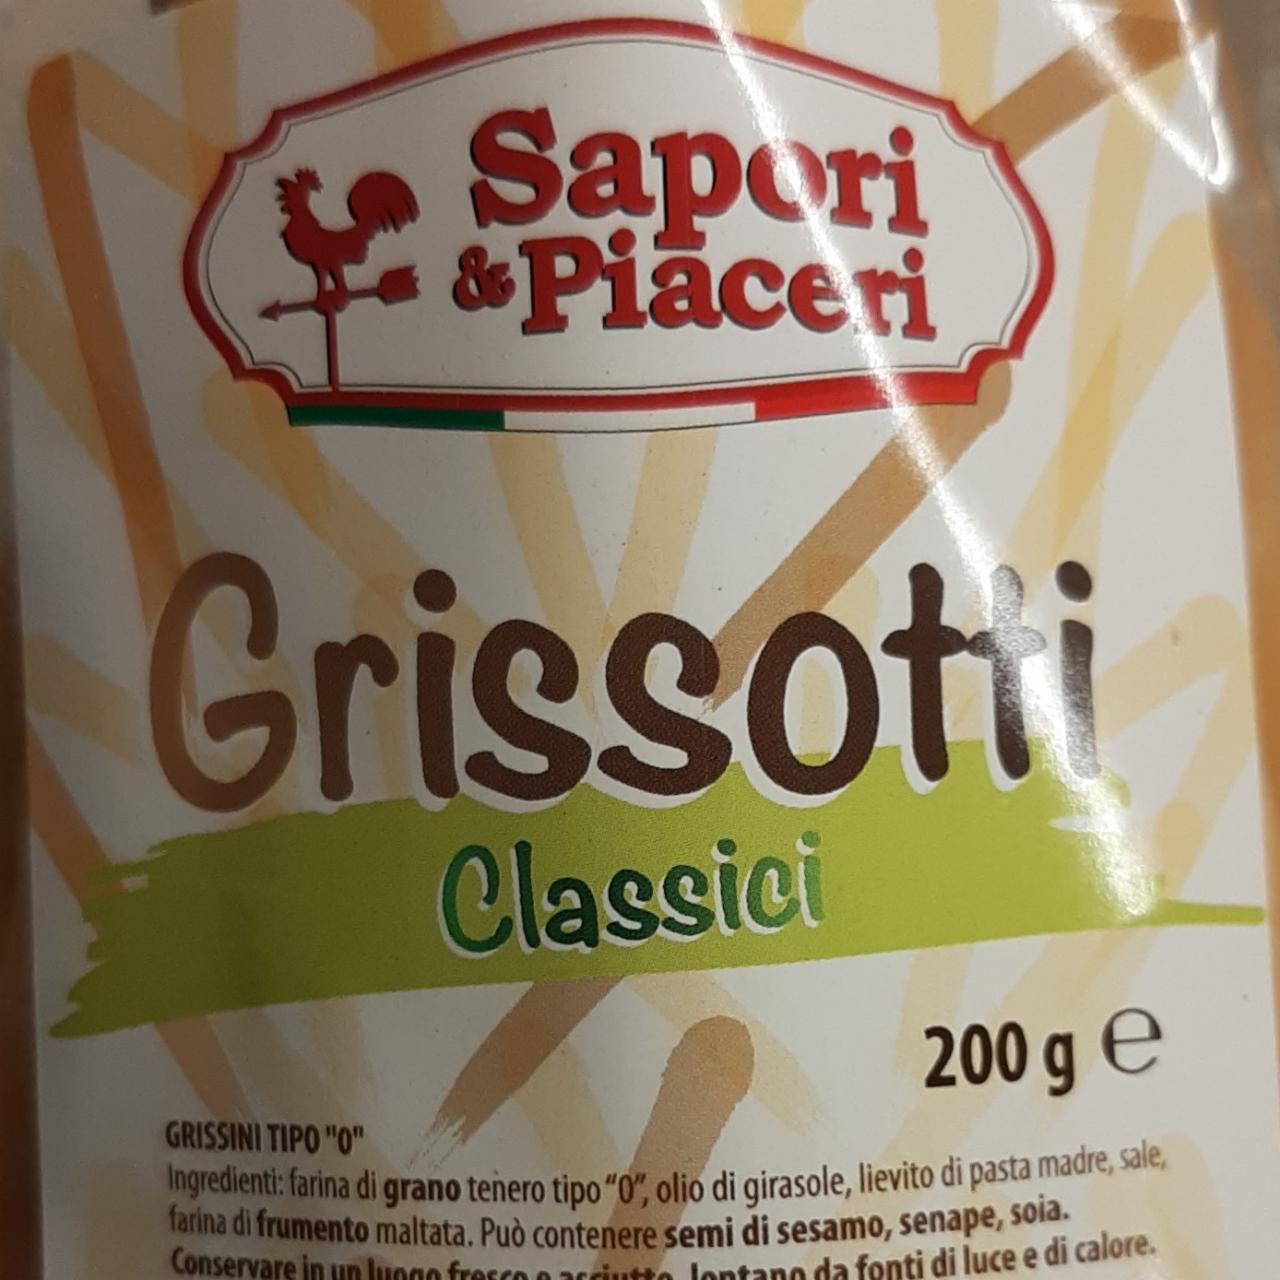 Fotografie - Grissotti Classici Sapori & Piaceri